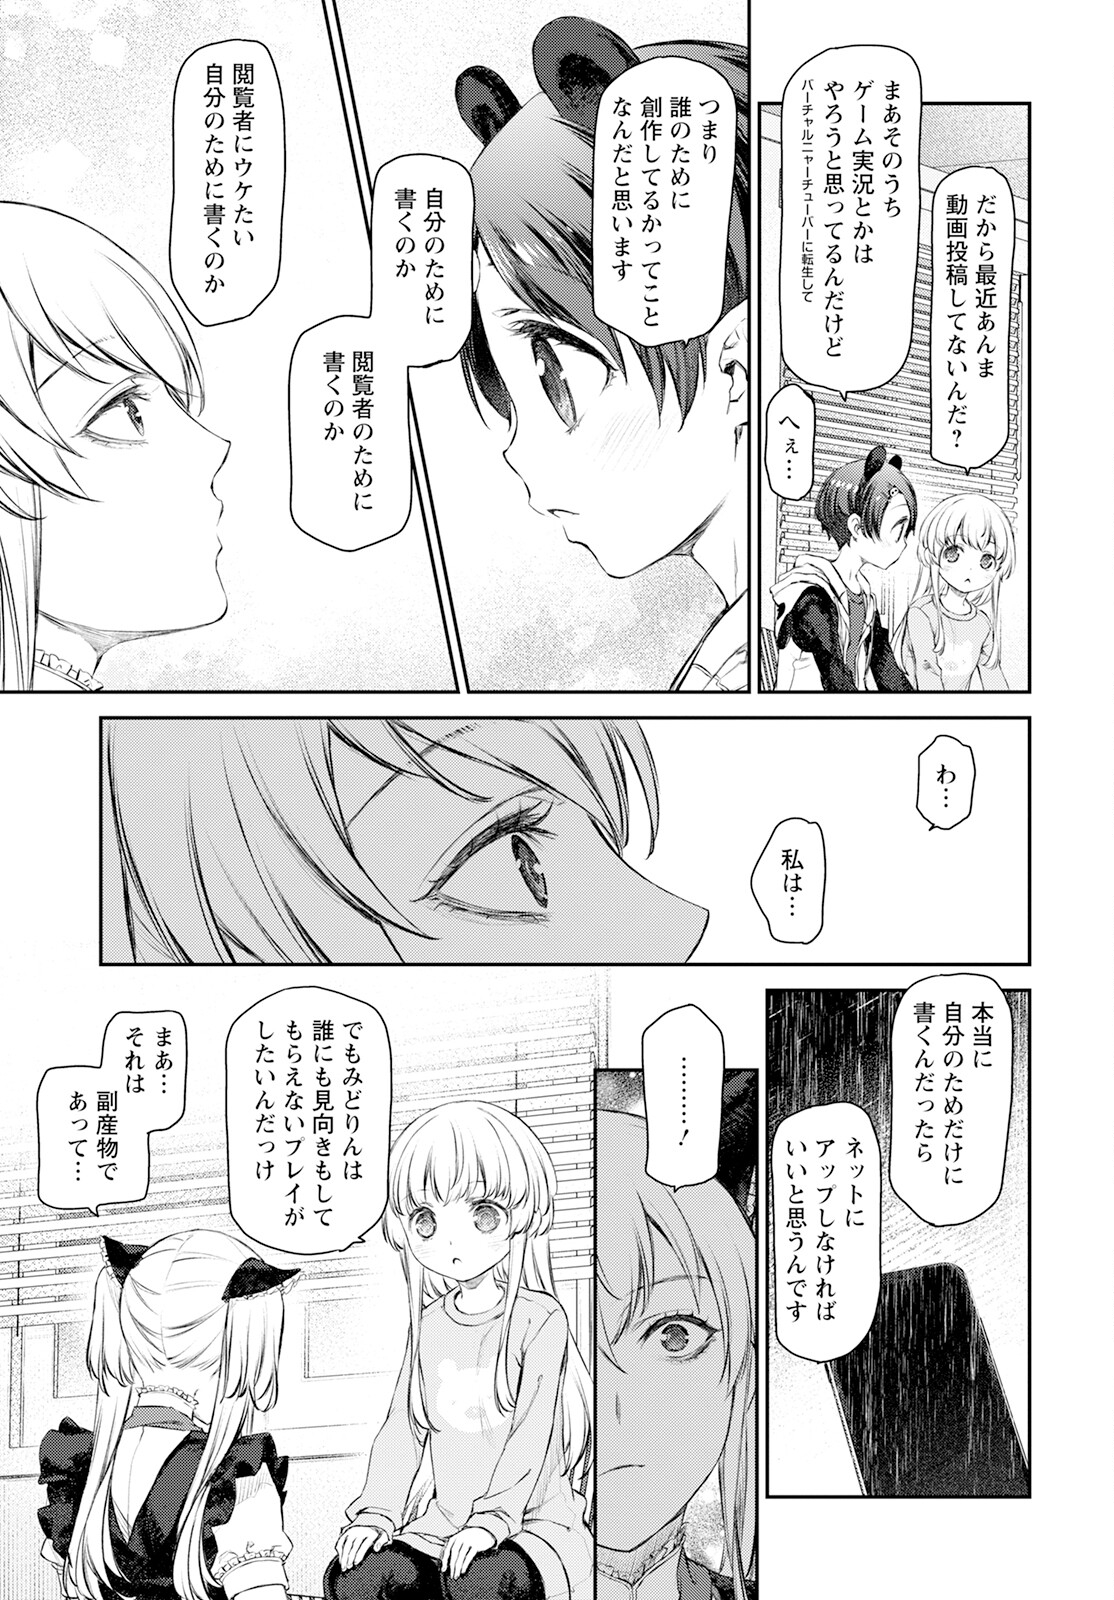 Uchi no Maid ga Uzasugiru! - Chapter 56 - Page 19